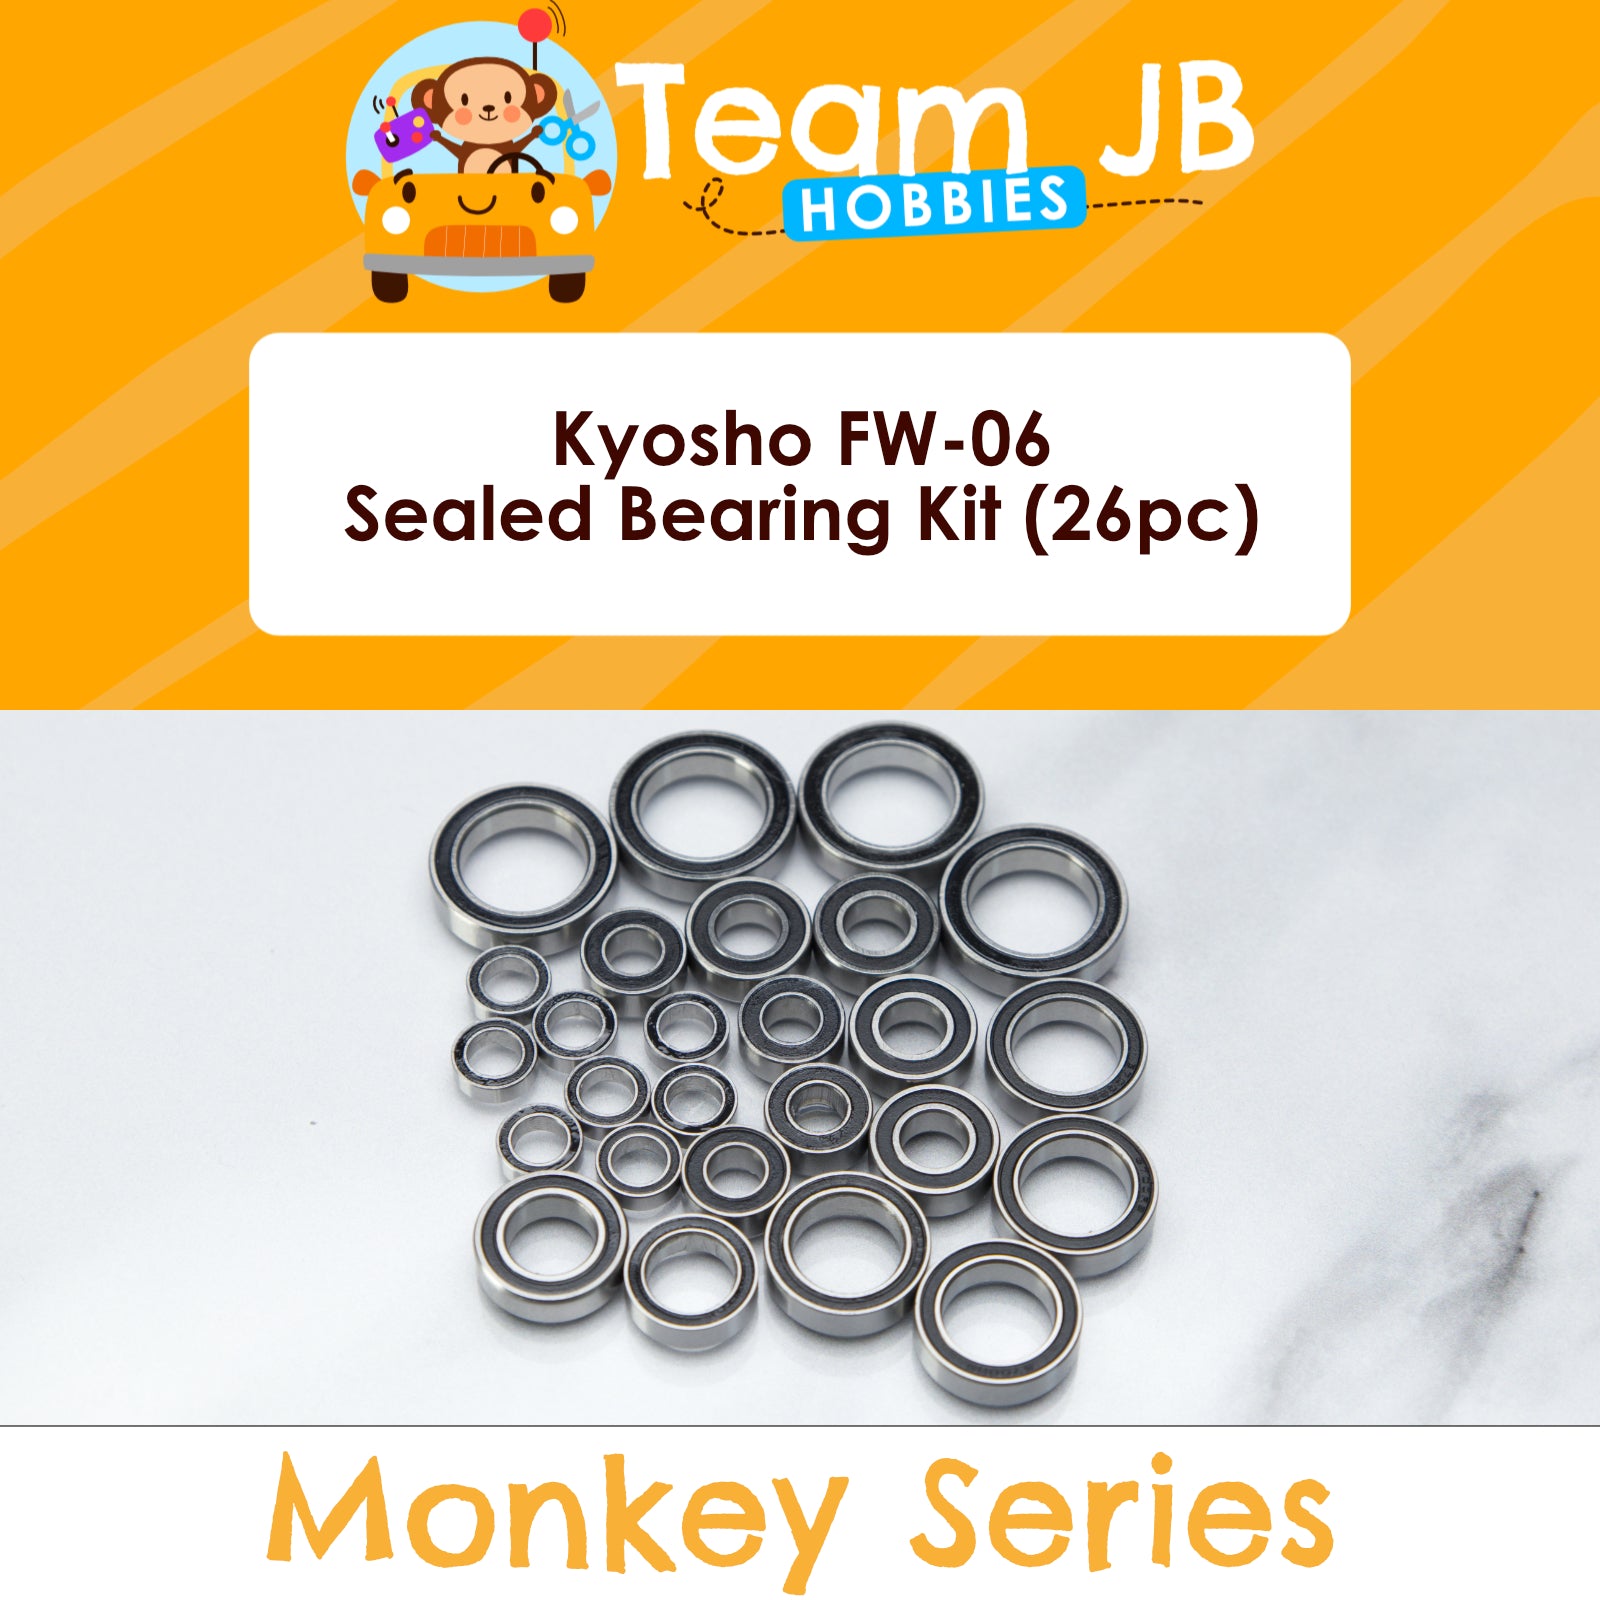 Kyosho FW-06 - Sealed Bearing Kit